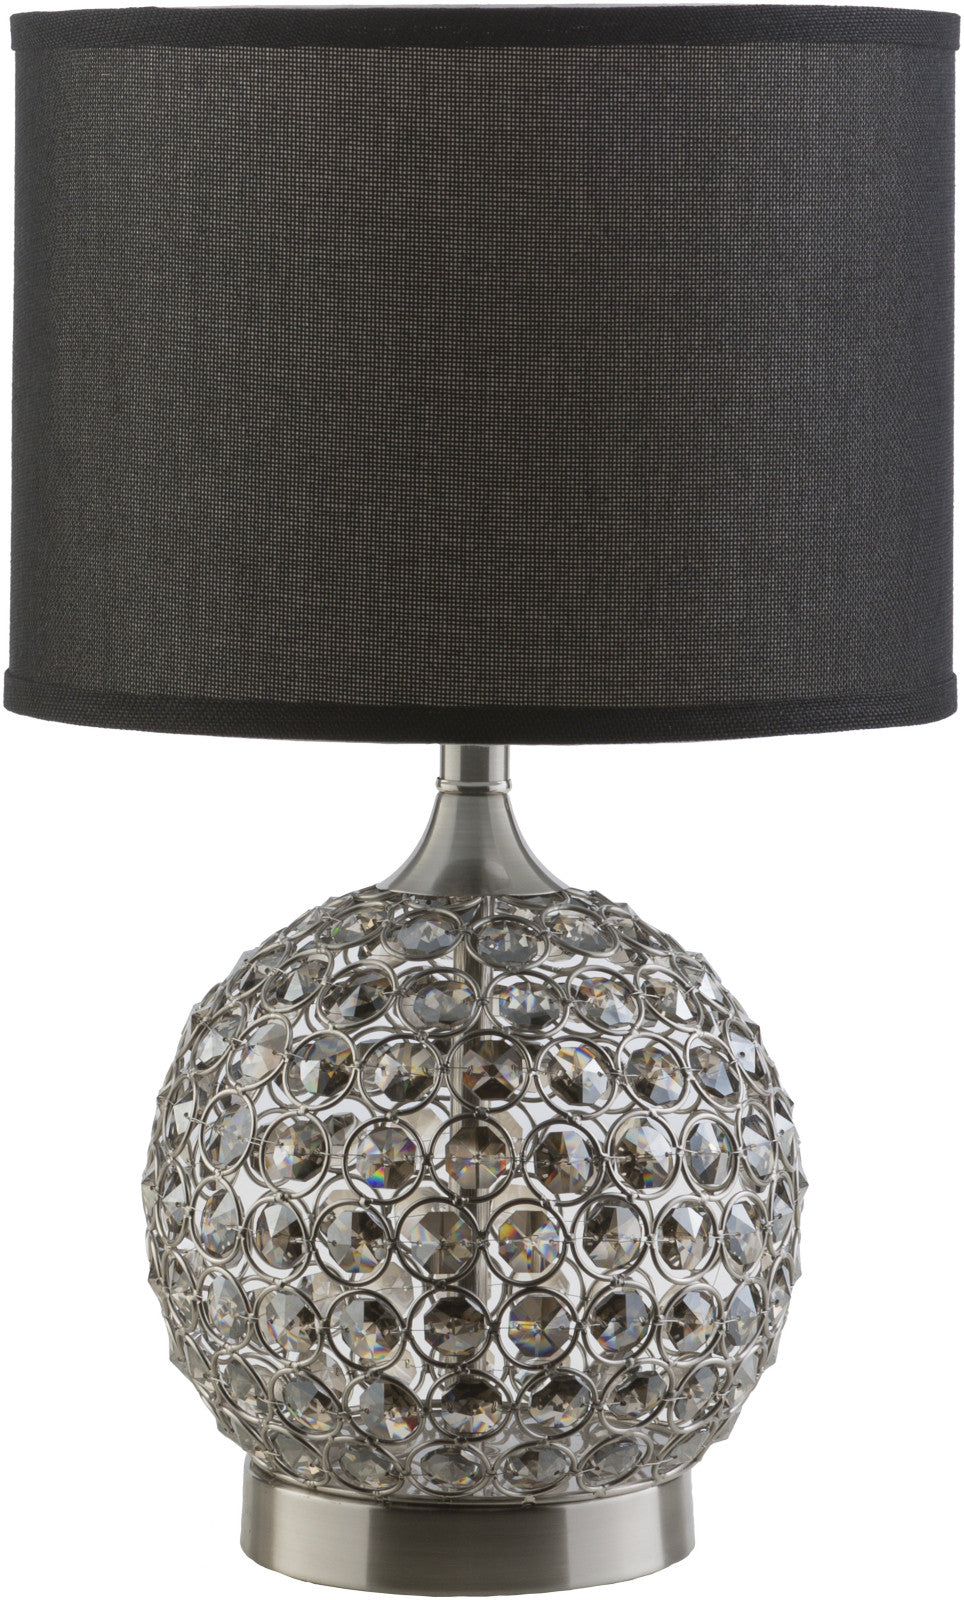 Surya Dauphine DPH-194 Silver Lamp Table Lamp